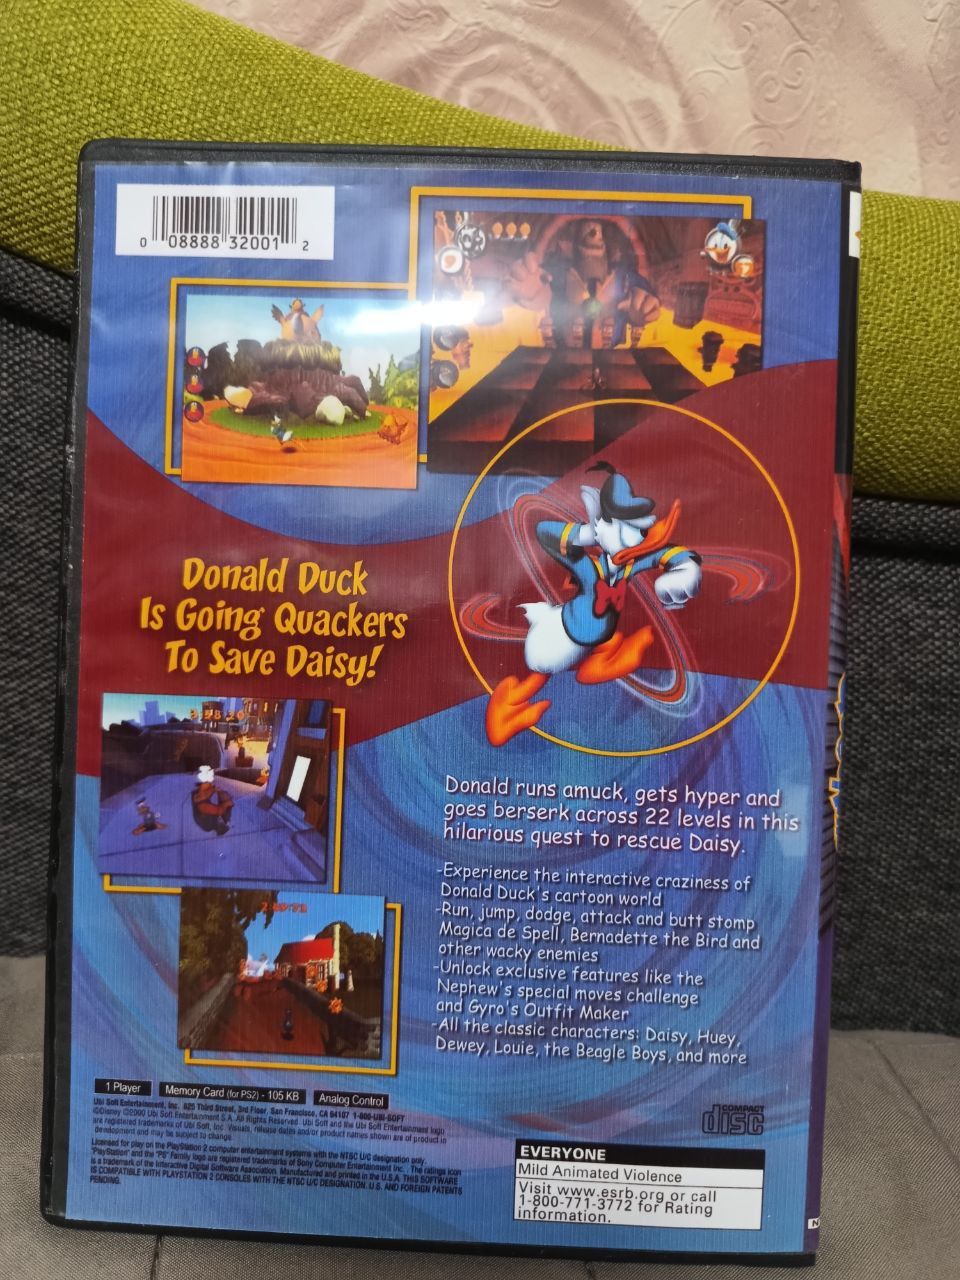 Продам диск PS2 Donald Duck